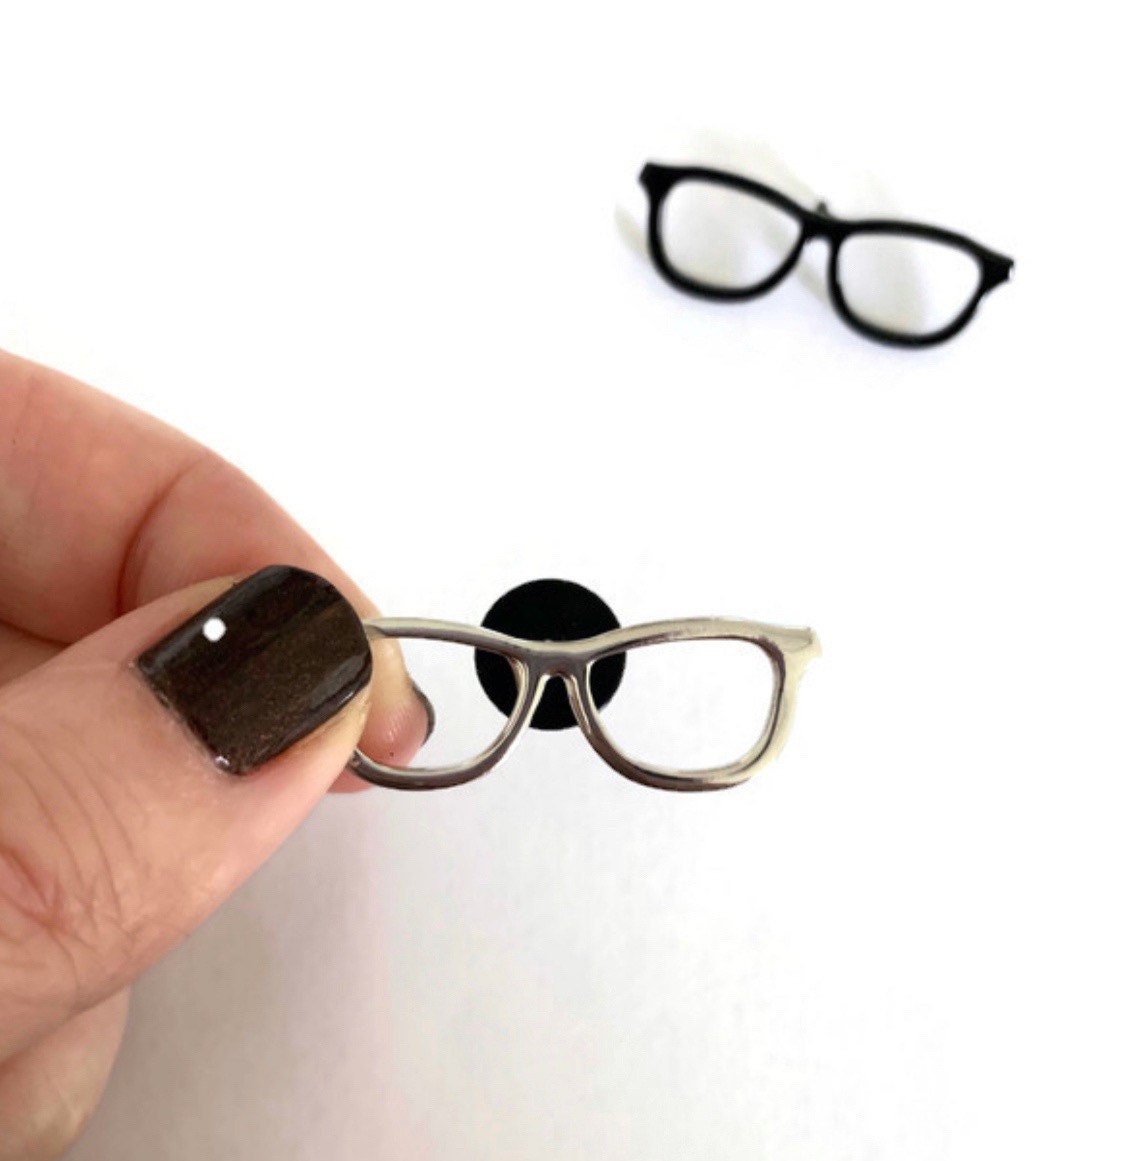 Pin on eye glasses